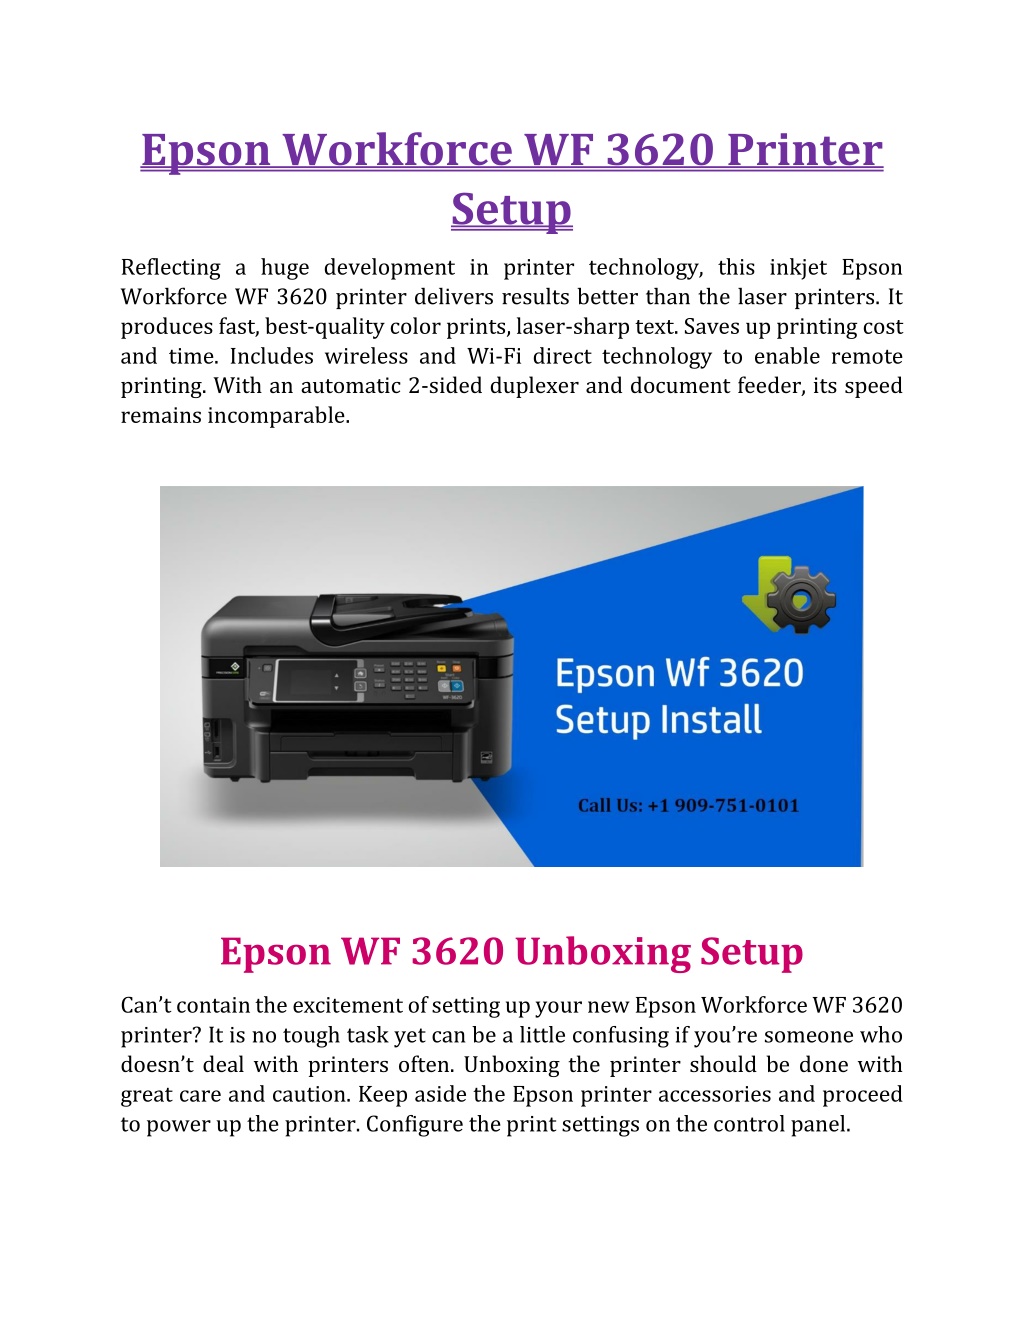 Ppt Epson Workforce Wf 3620 Printer Setup Powerpoint Presentation Free Download Id11632037 1450